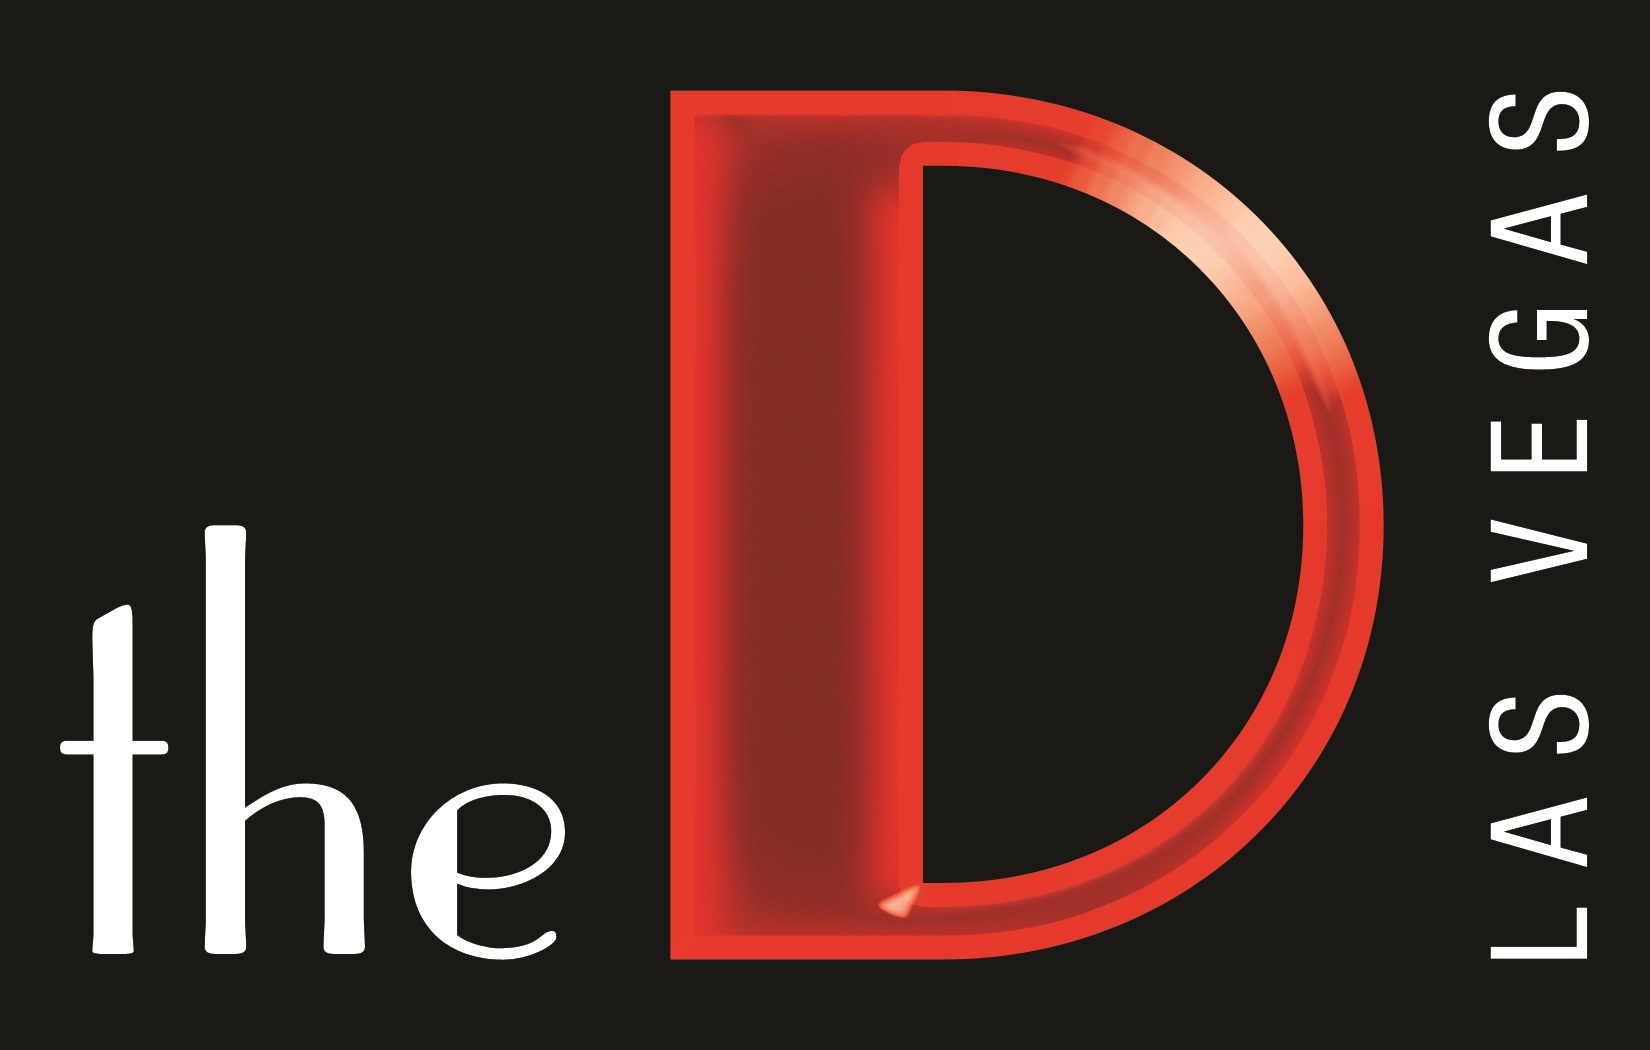 The D logo